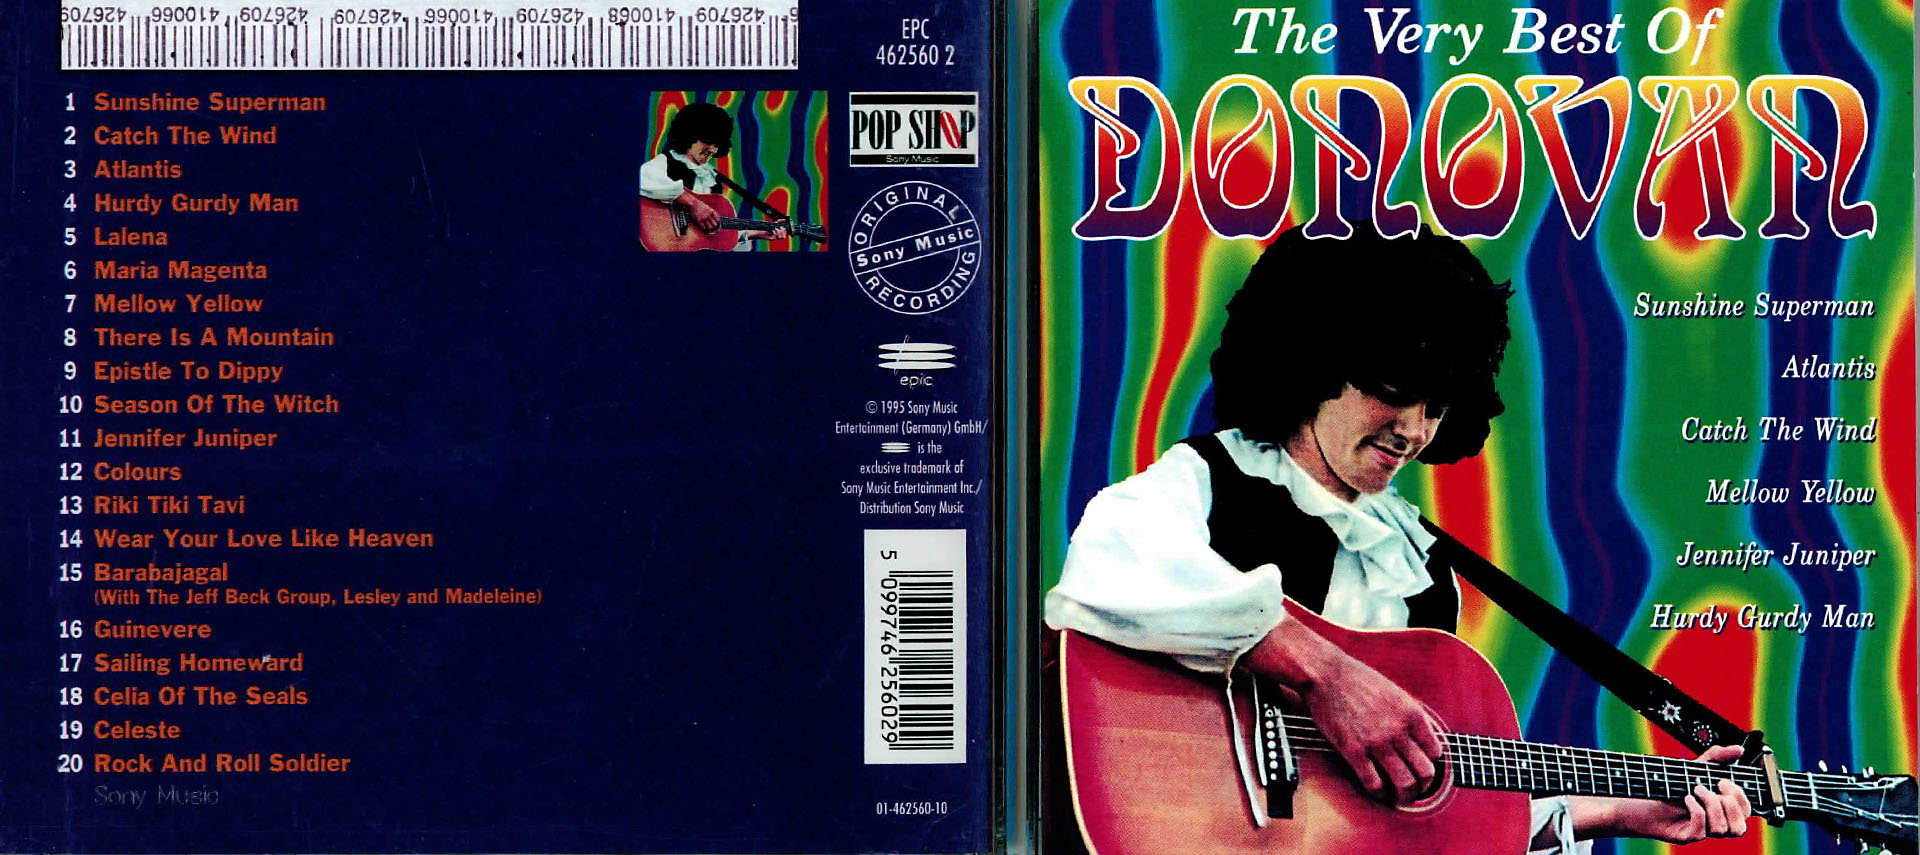 The Very Best Of Donovan - Donovan